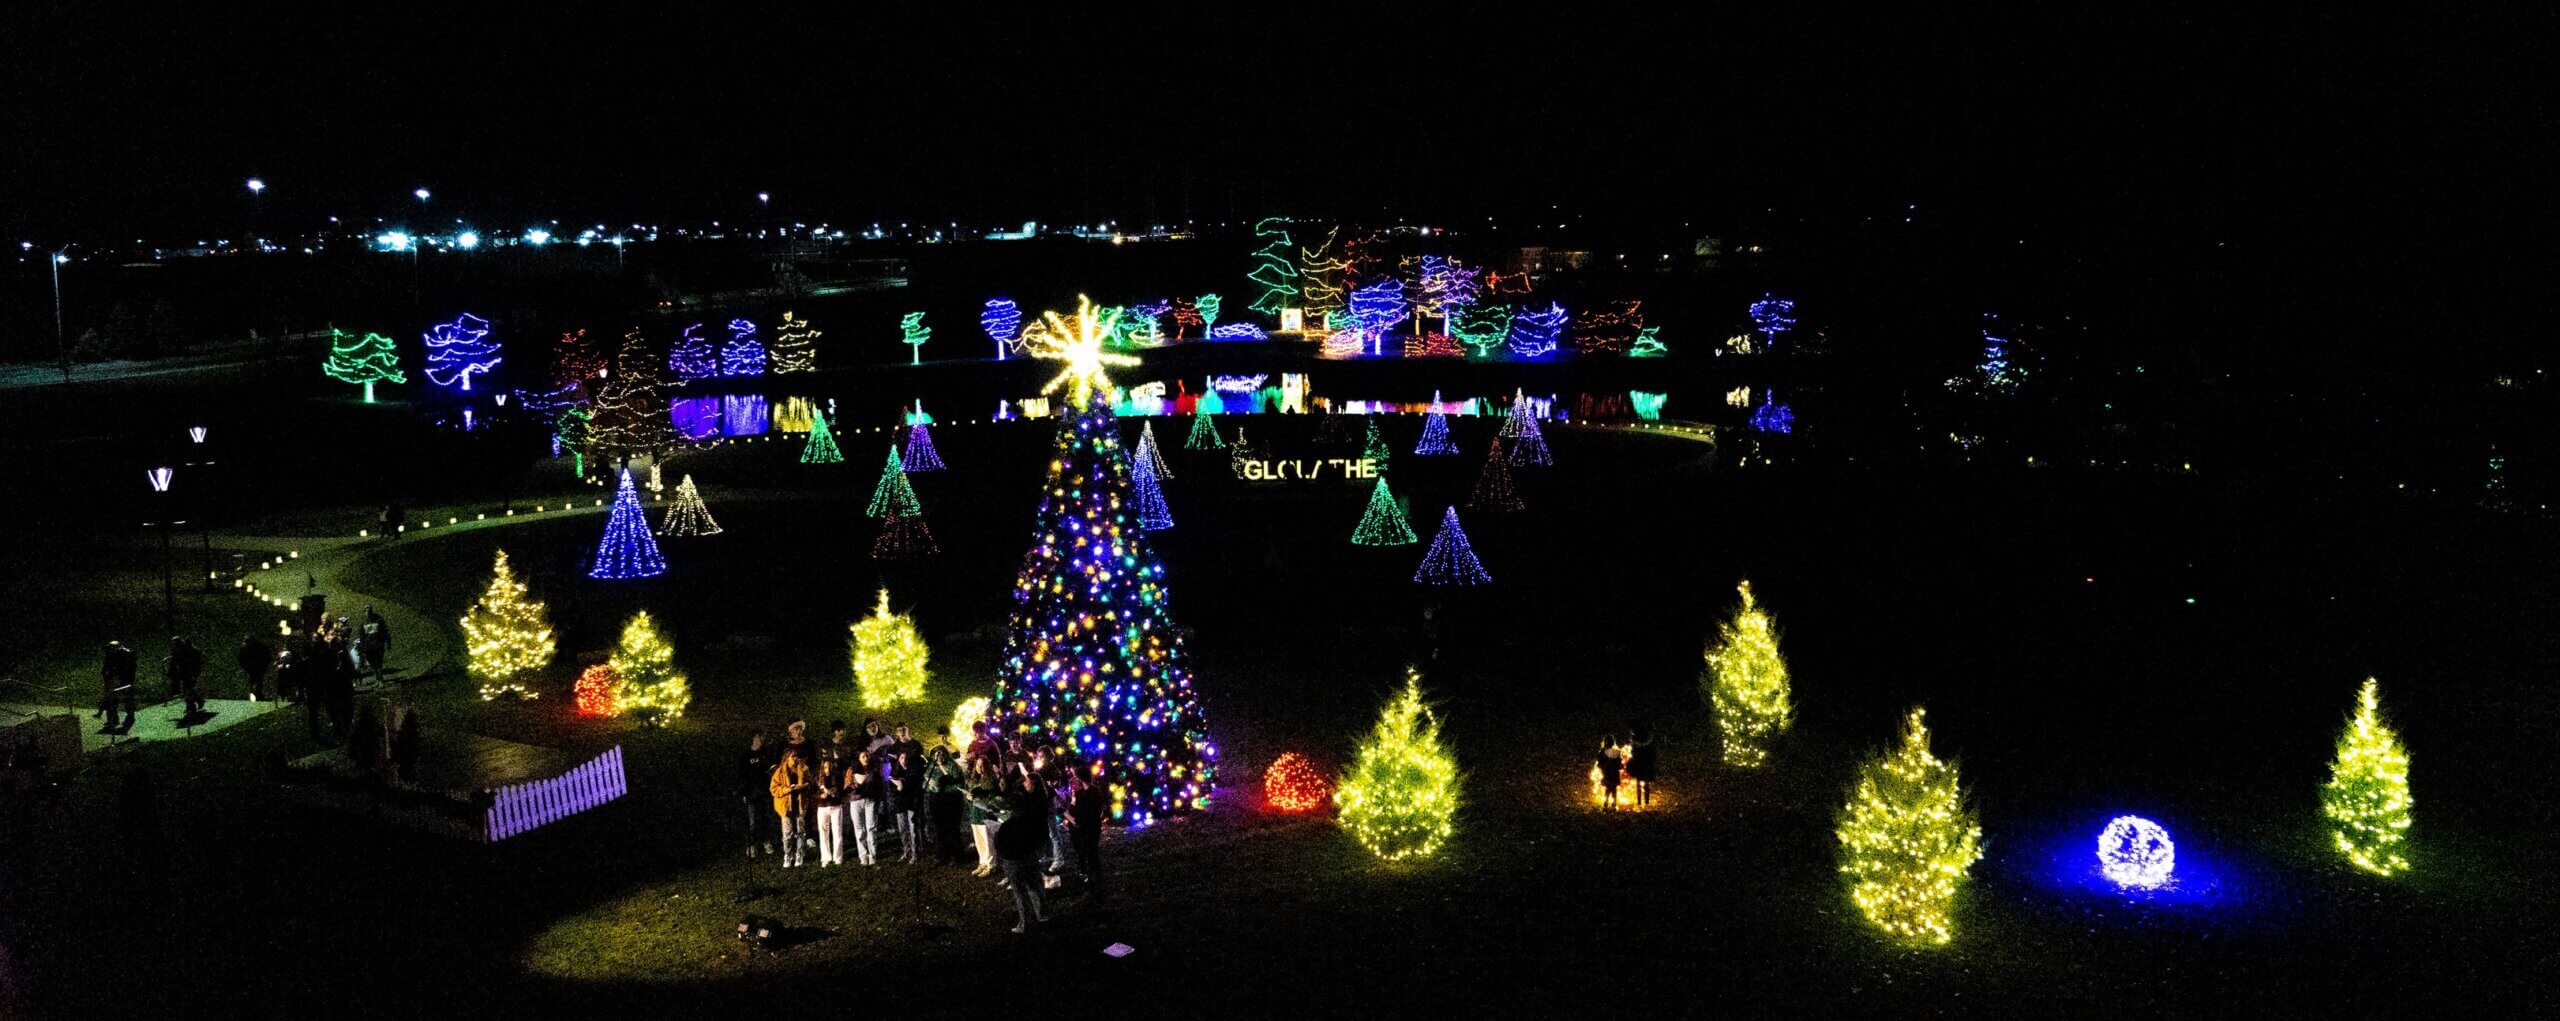 Olathe Community Center "GLOLATHE" Holiday Lights, seasonal lights